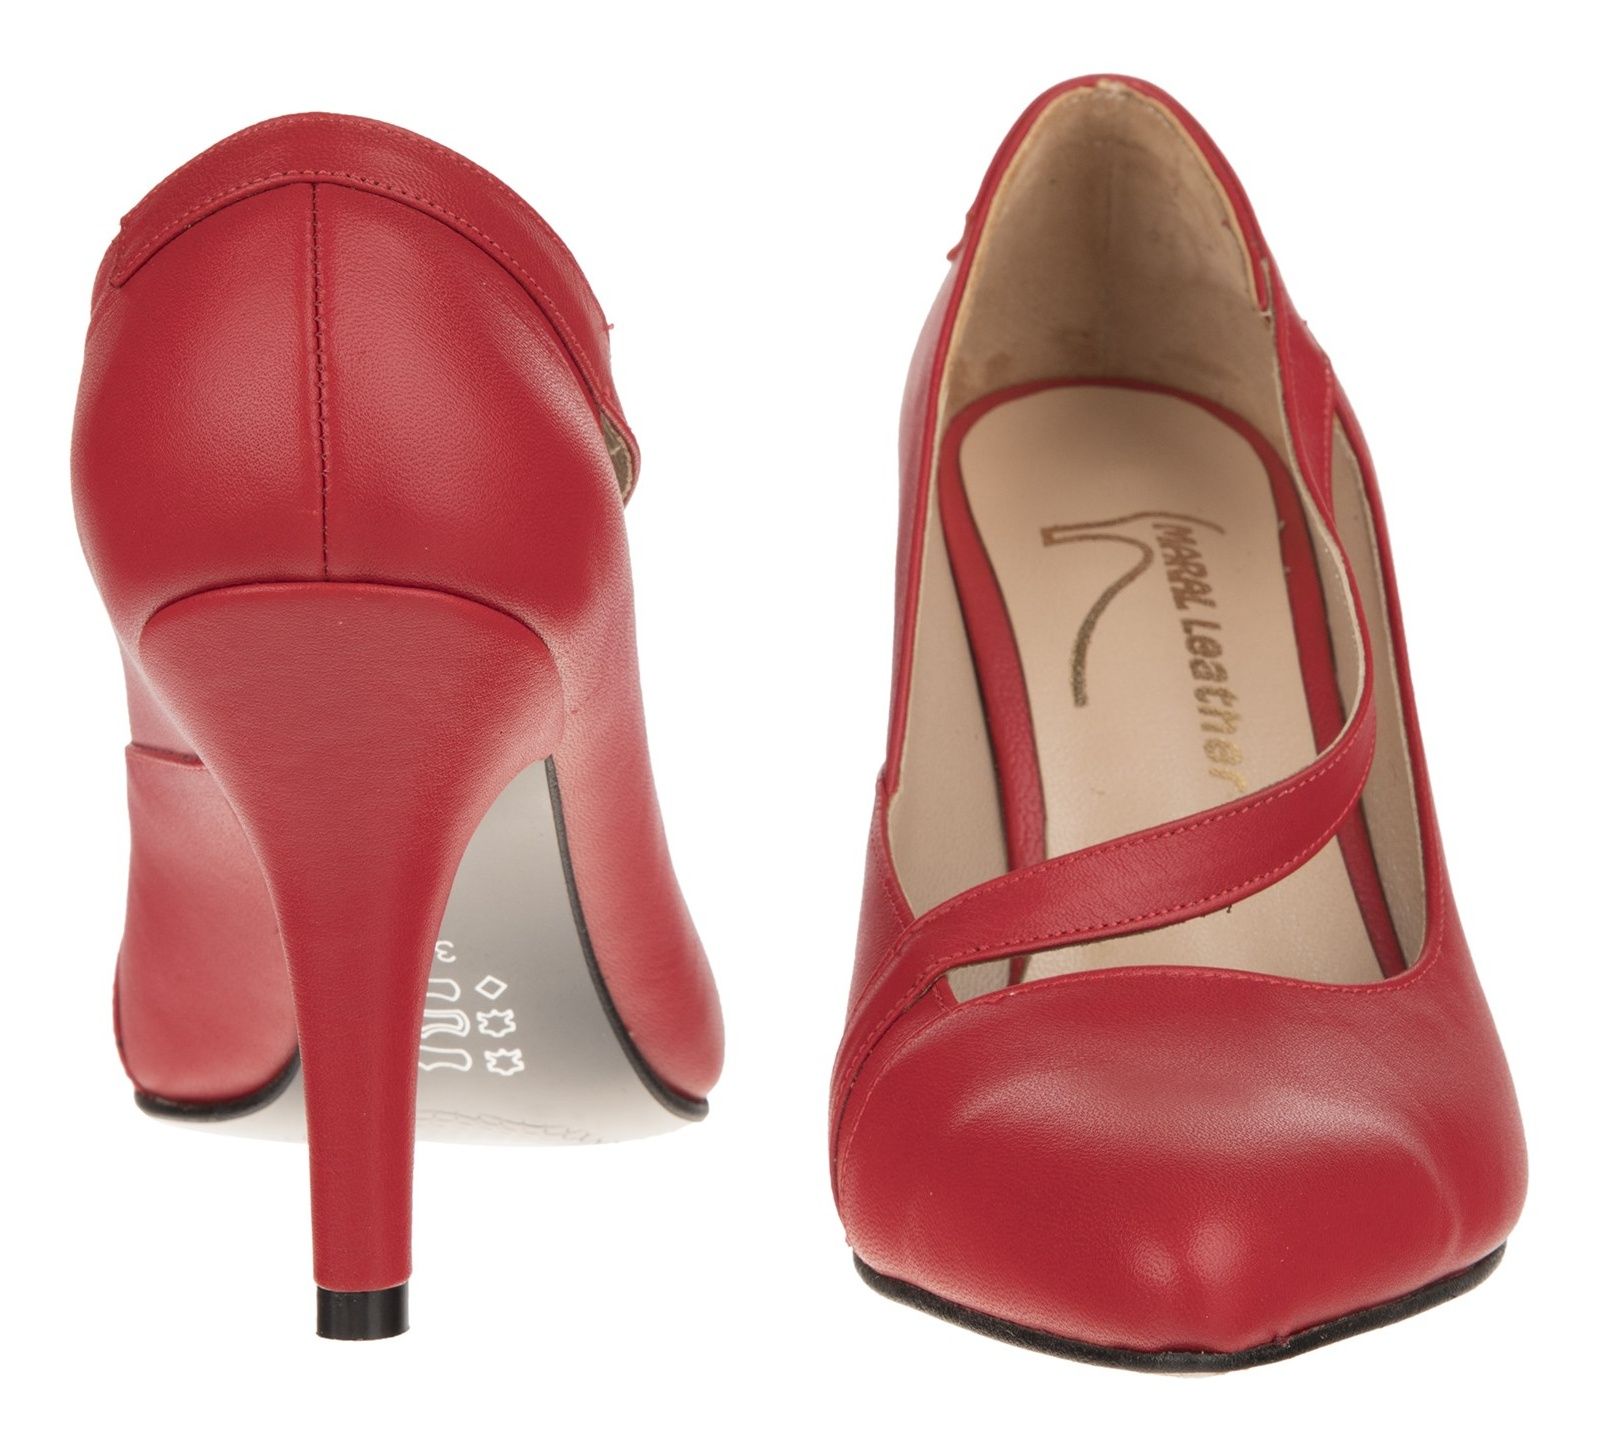 کفش پاشنه بلند چرم زنانه - مارال چرم - قرمز     - 6